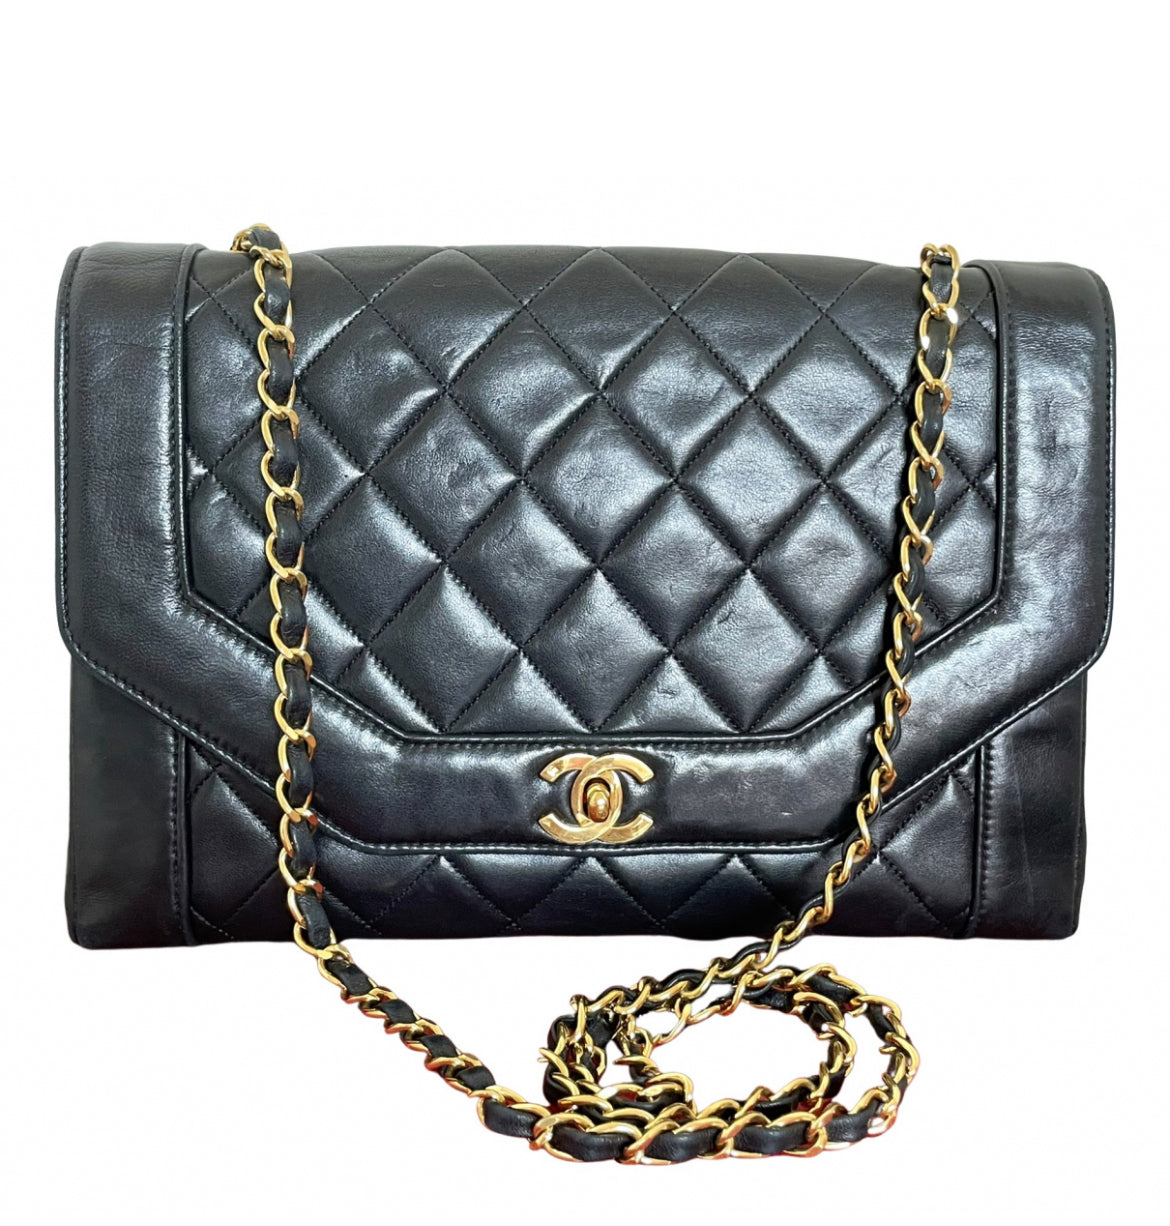 Vintage Chanel black lambskin chain 2.55 shoulder bag with gold